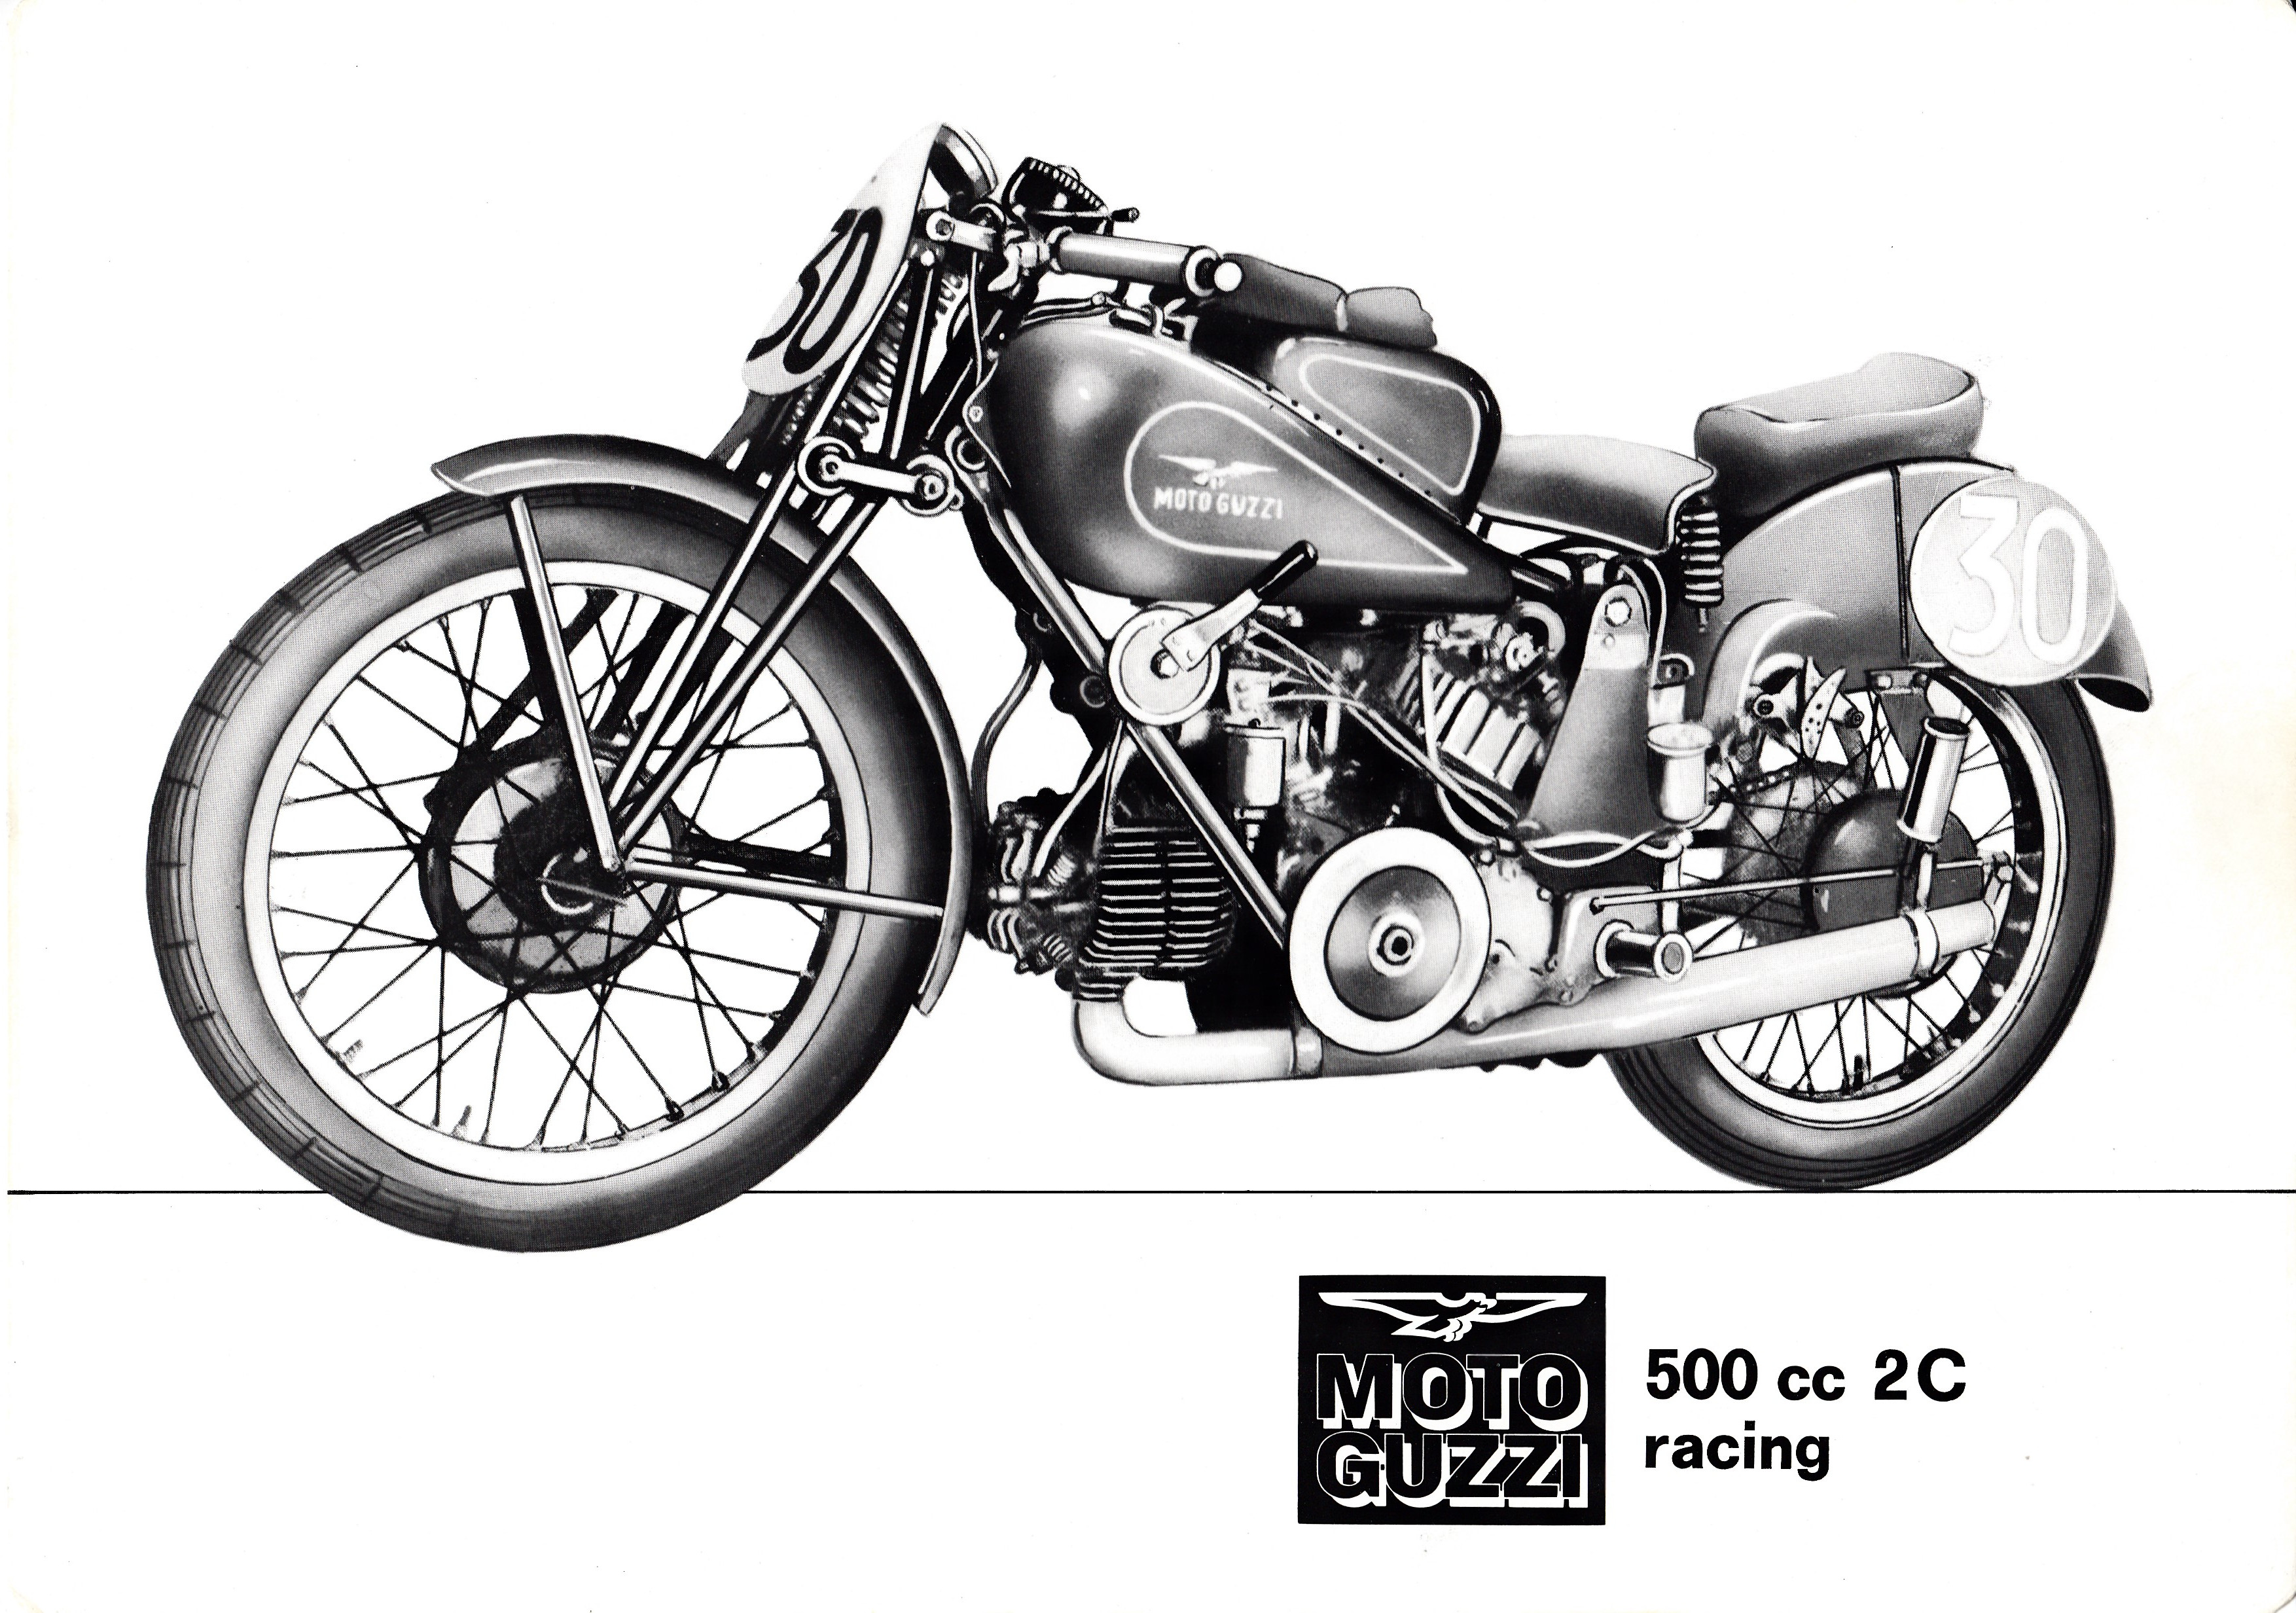 Brochure - Moto Guzzi 500 cc 2 cylinder racing